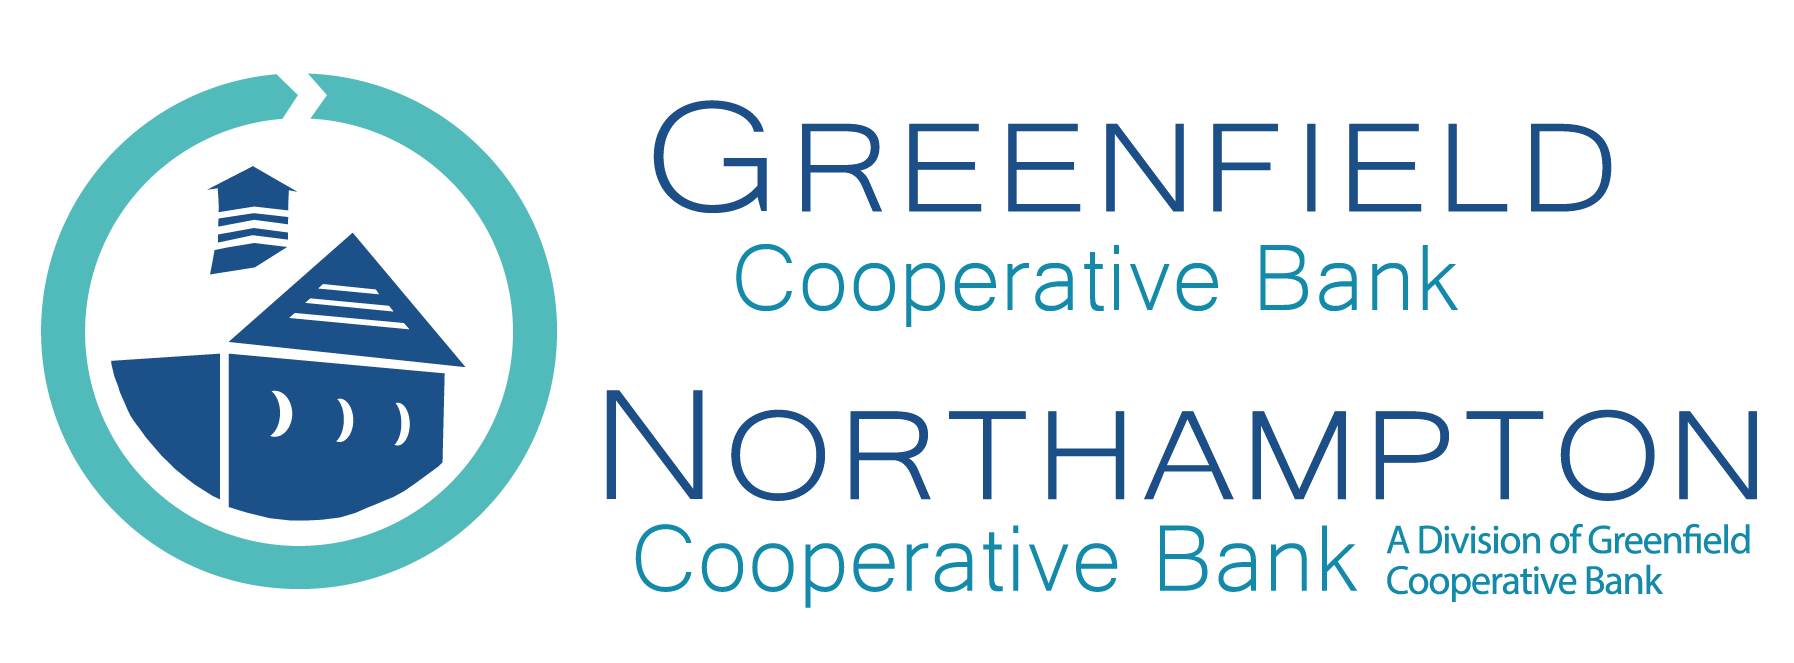 Greenfield Cooperative Bank Logo